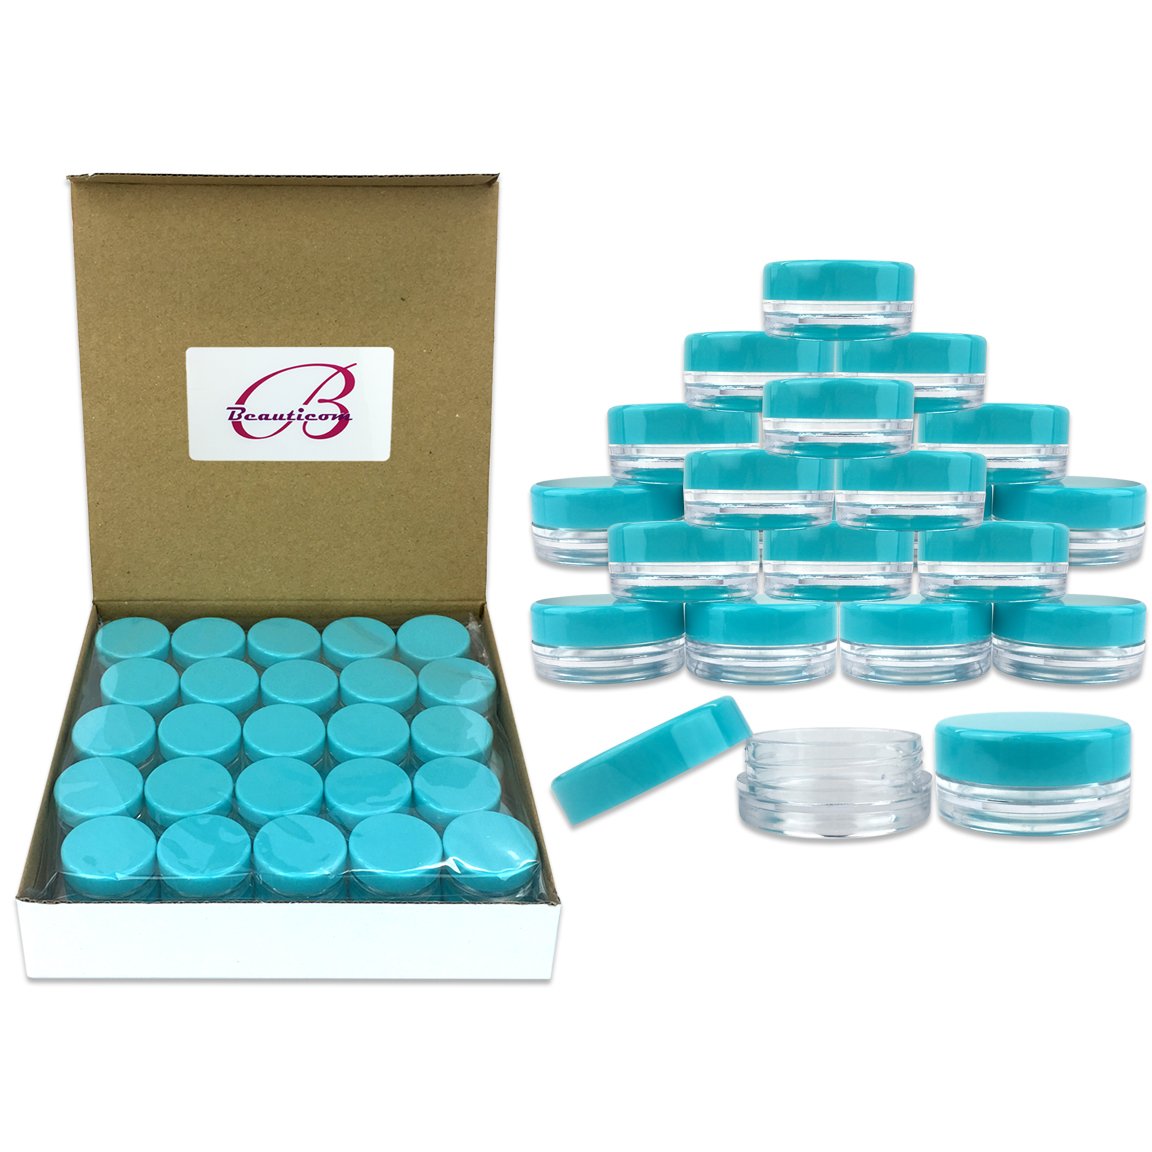 (100 Pieces Jars + Lid) Beauticom 3G/3ML Round Clear Jars with Teal Sky Blue Screw Cap Lids for Scrubs, Oils, Toner, Salves, Creams, Lotions, Makeup Samples, Lip Balms - BPA Free